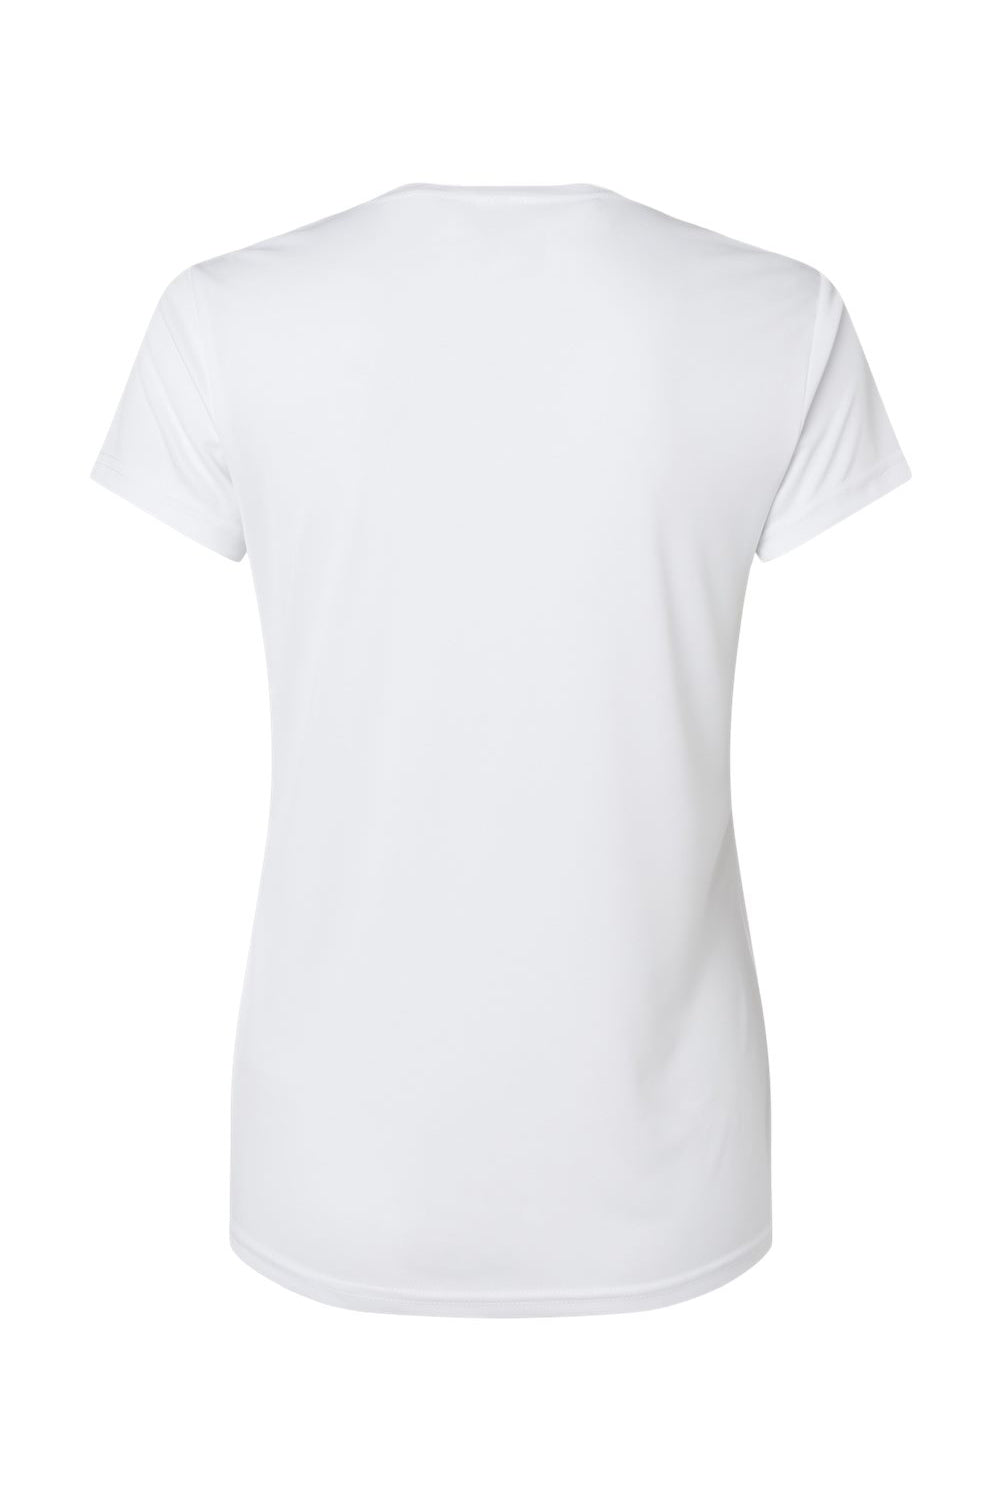 Paragon 204 Womens Islander Performance Short Sleeve Crewneck T-Shirt White Flat Back